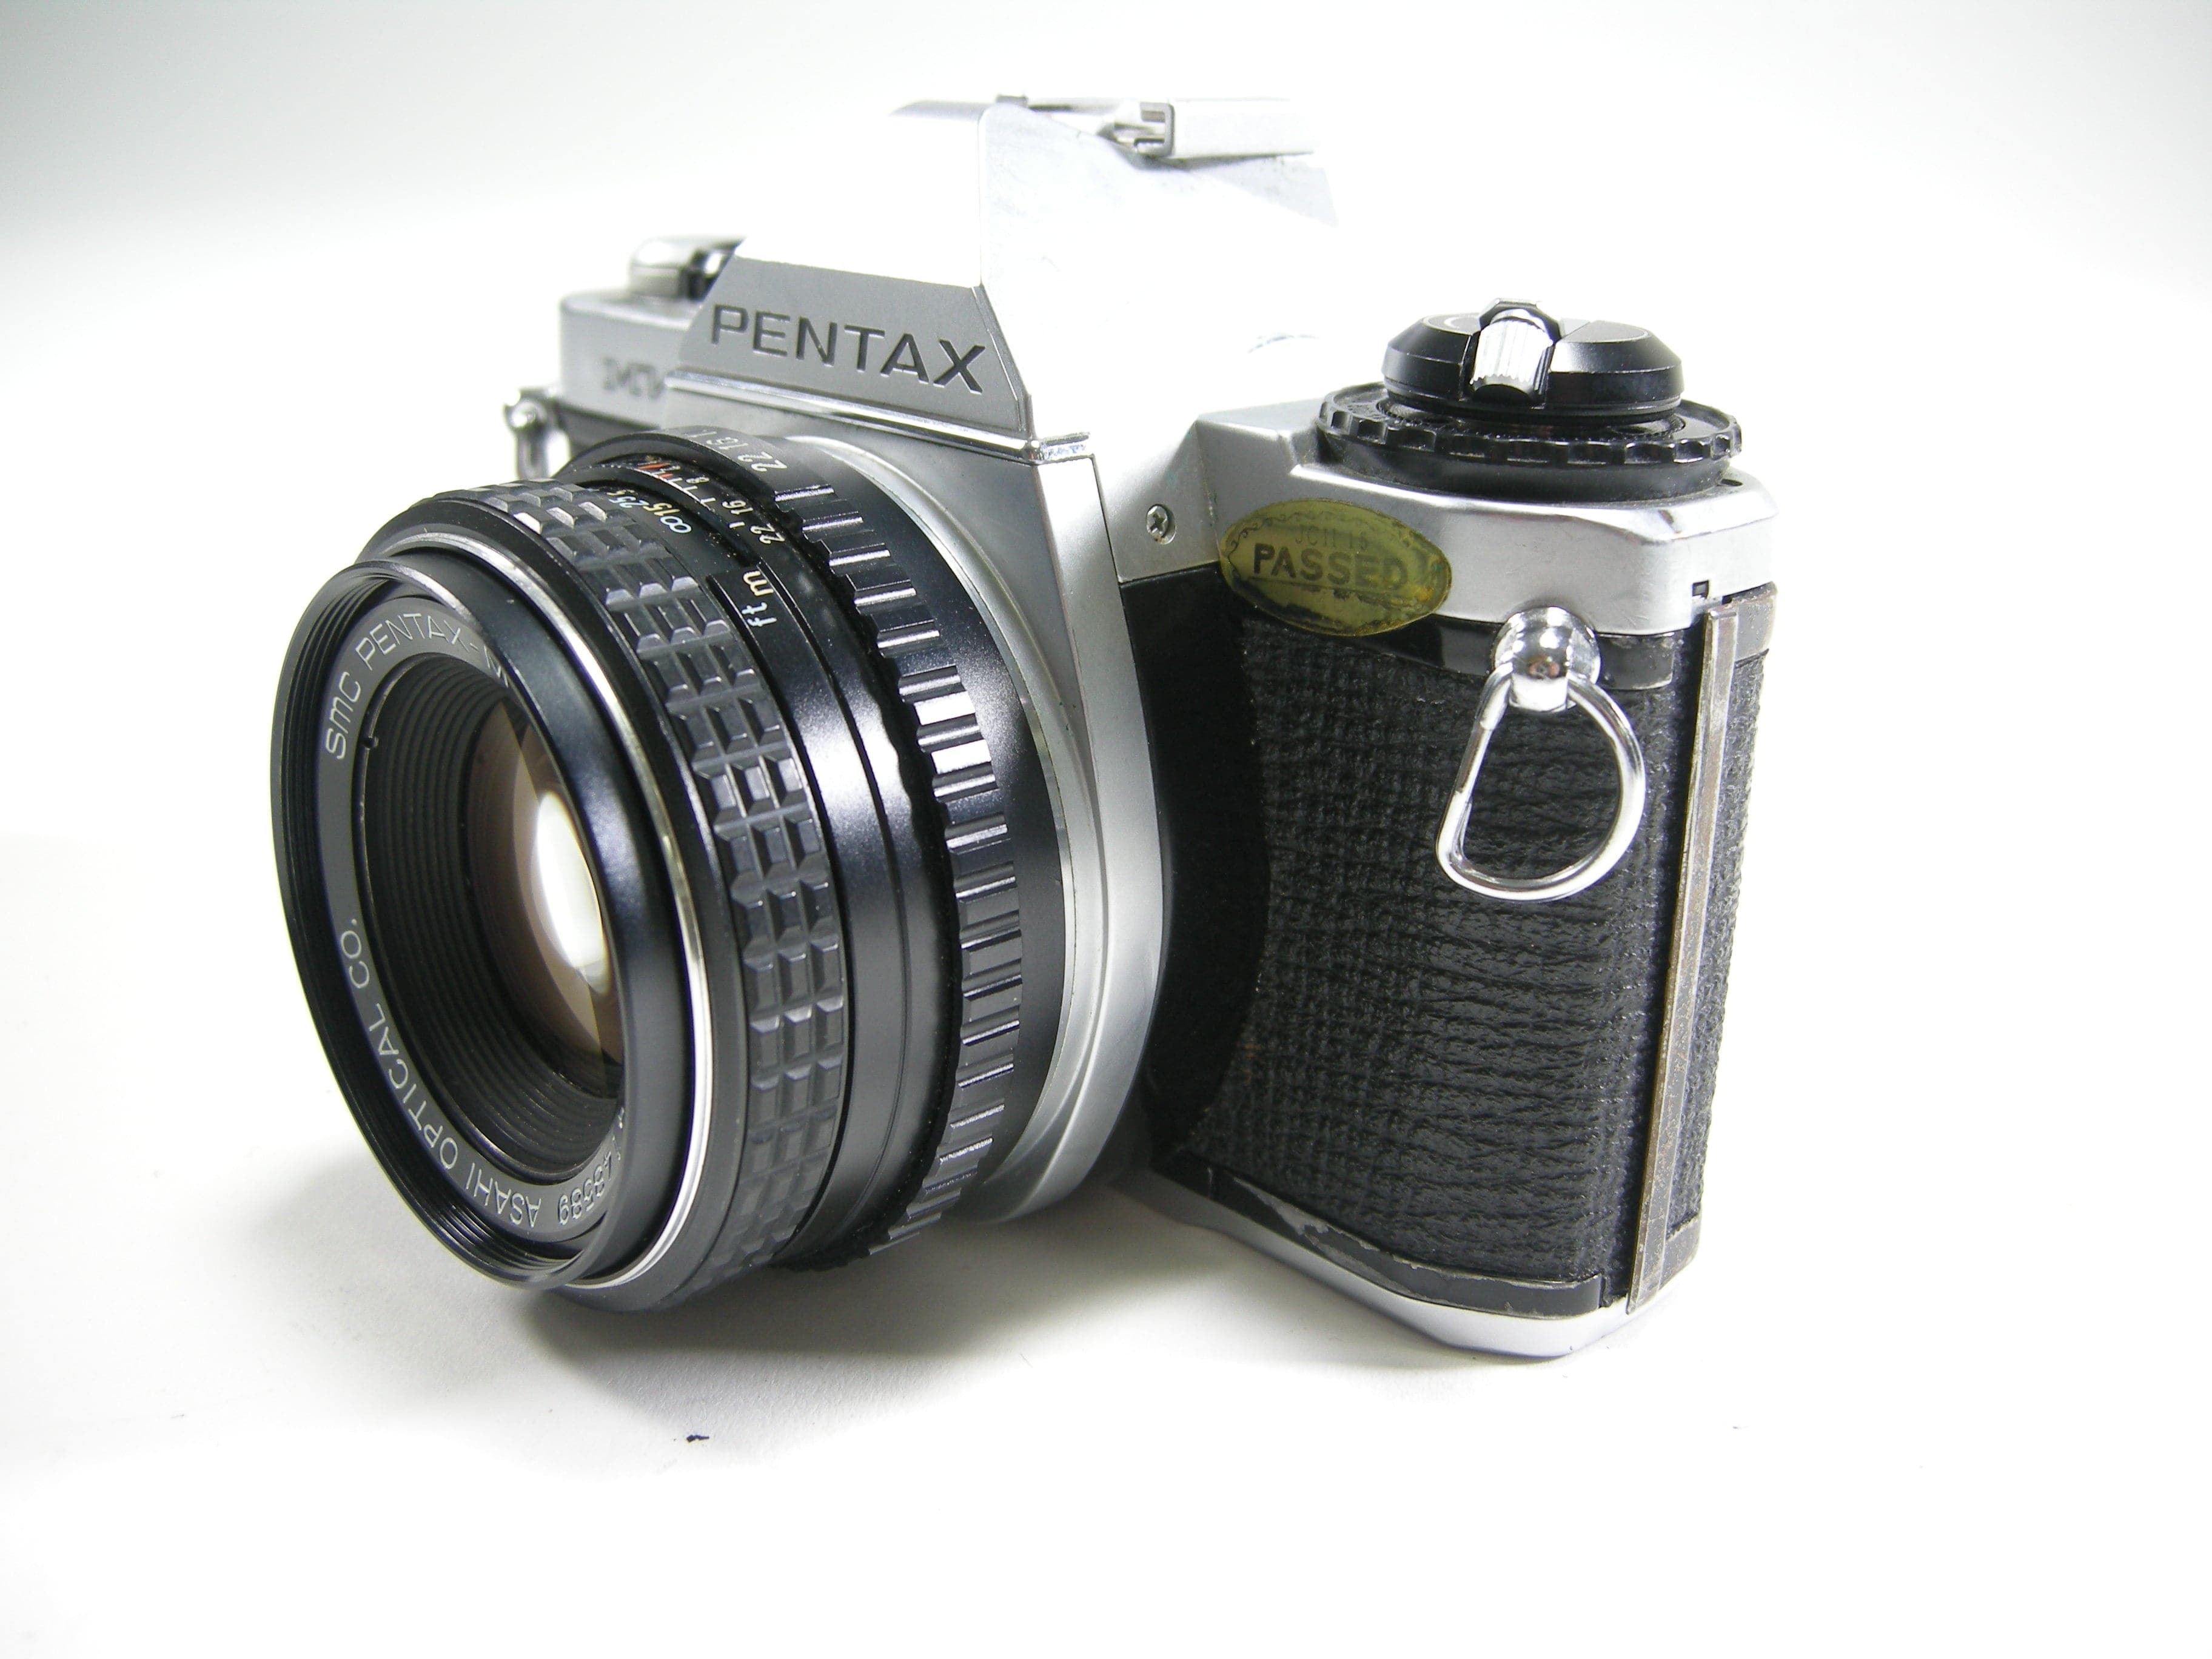 PENTAX MV1 50mm標準レンズ付き - フィルムカメラ